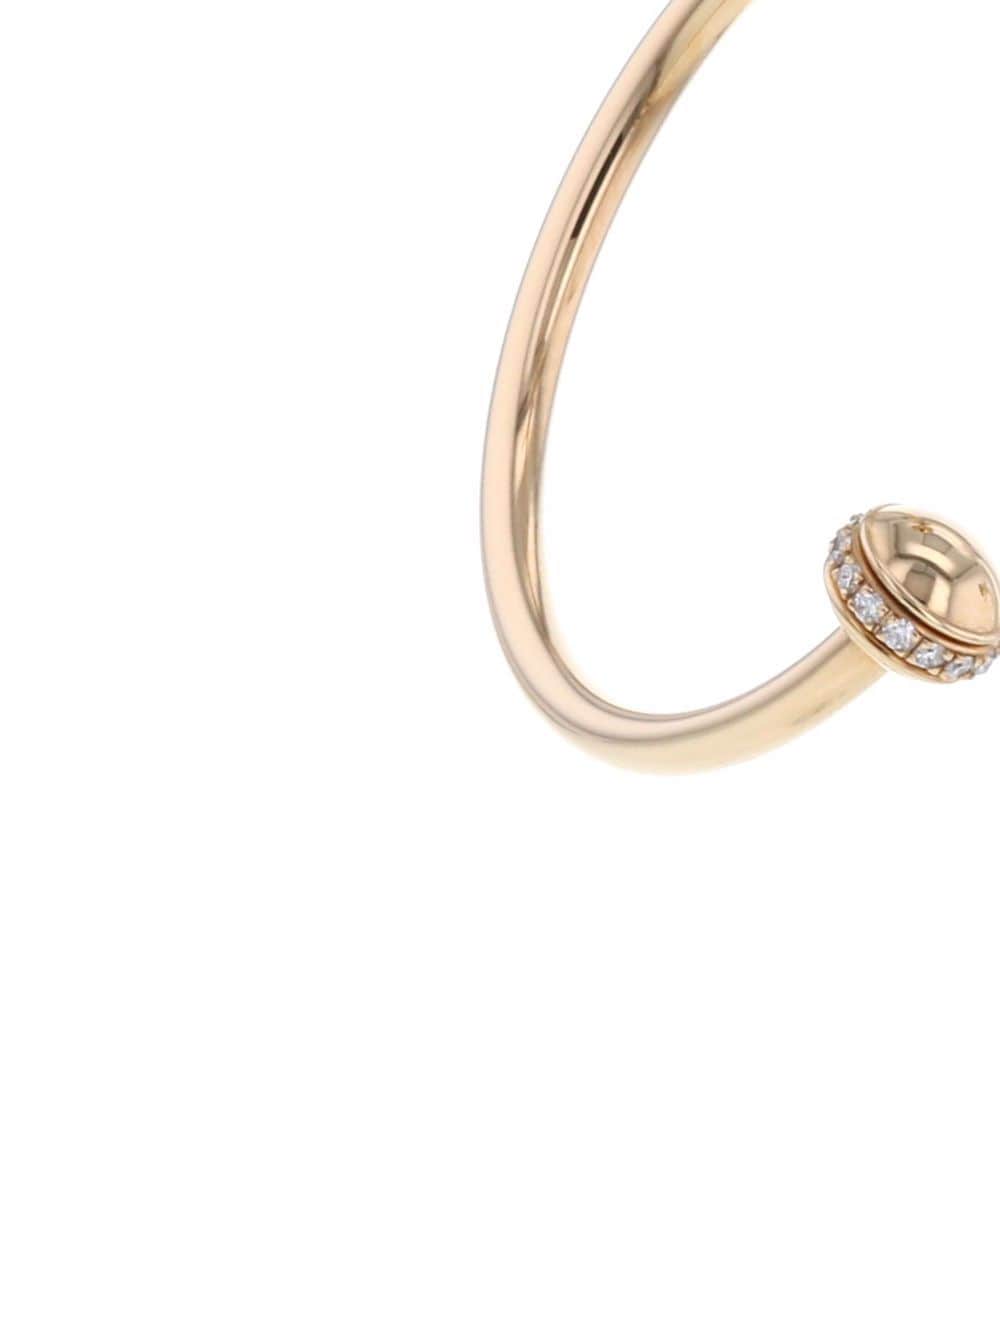 фото Piaget серьги-кольца possession из розового золота с бриллиантами